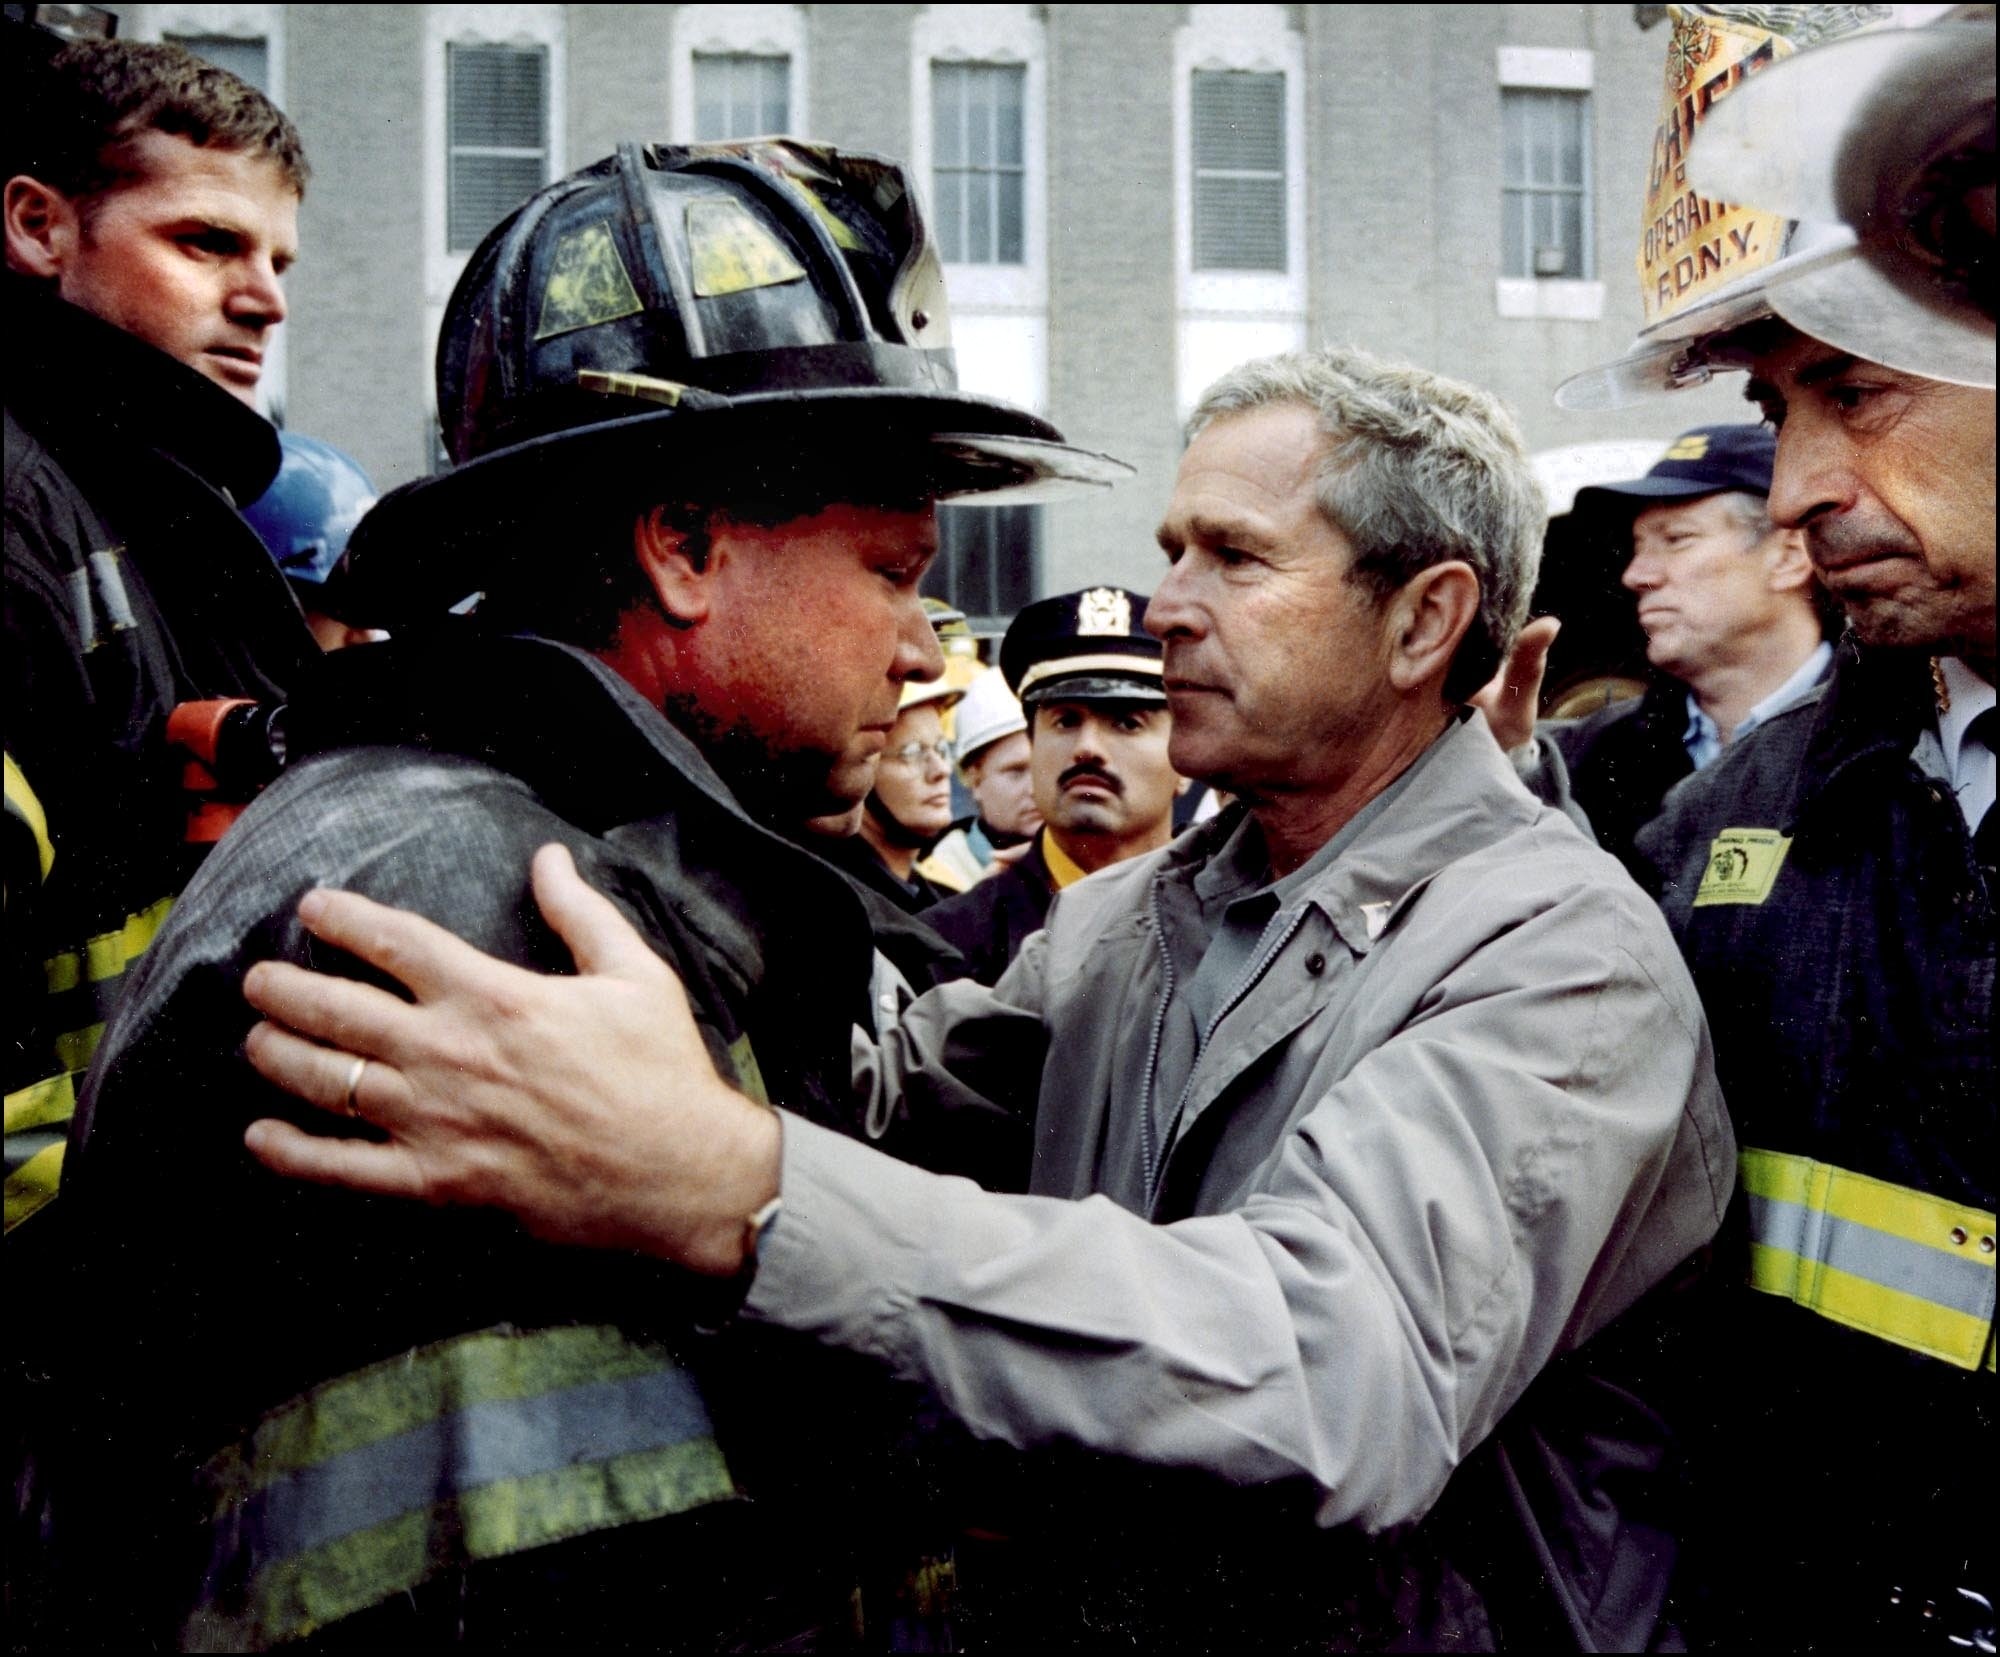 On Sept. 14, 2001, in New York City, President George Bush comforts New York City Fire Dept Lt Lenard Phelan of Battalion 46, following the terrorist attacks on the on the World Trade Center. (Gamma-Rapho via Getty Images)